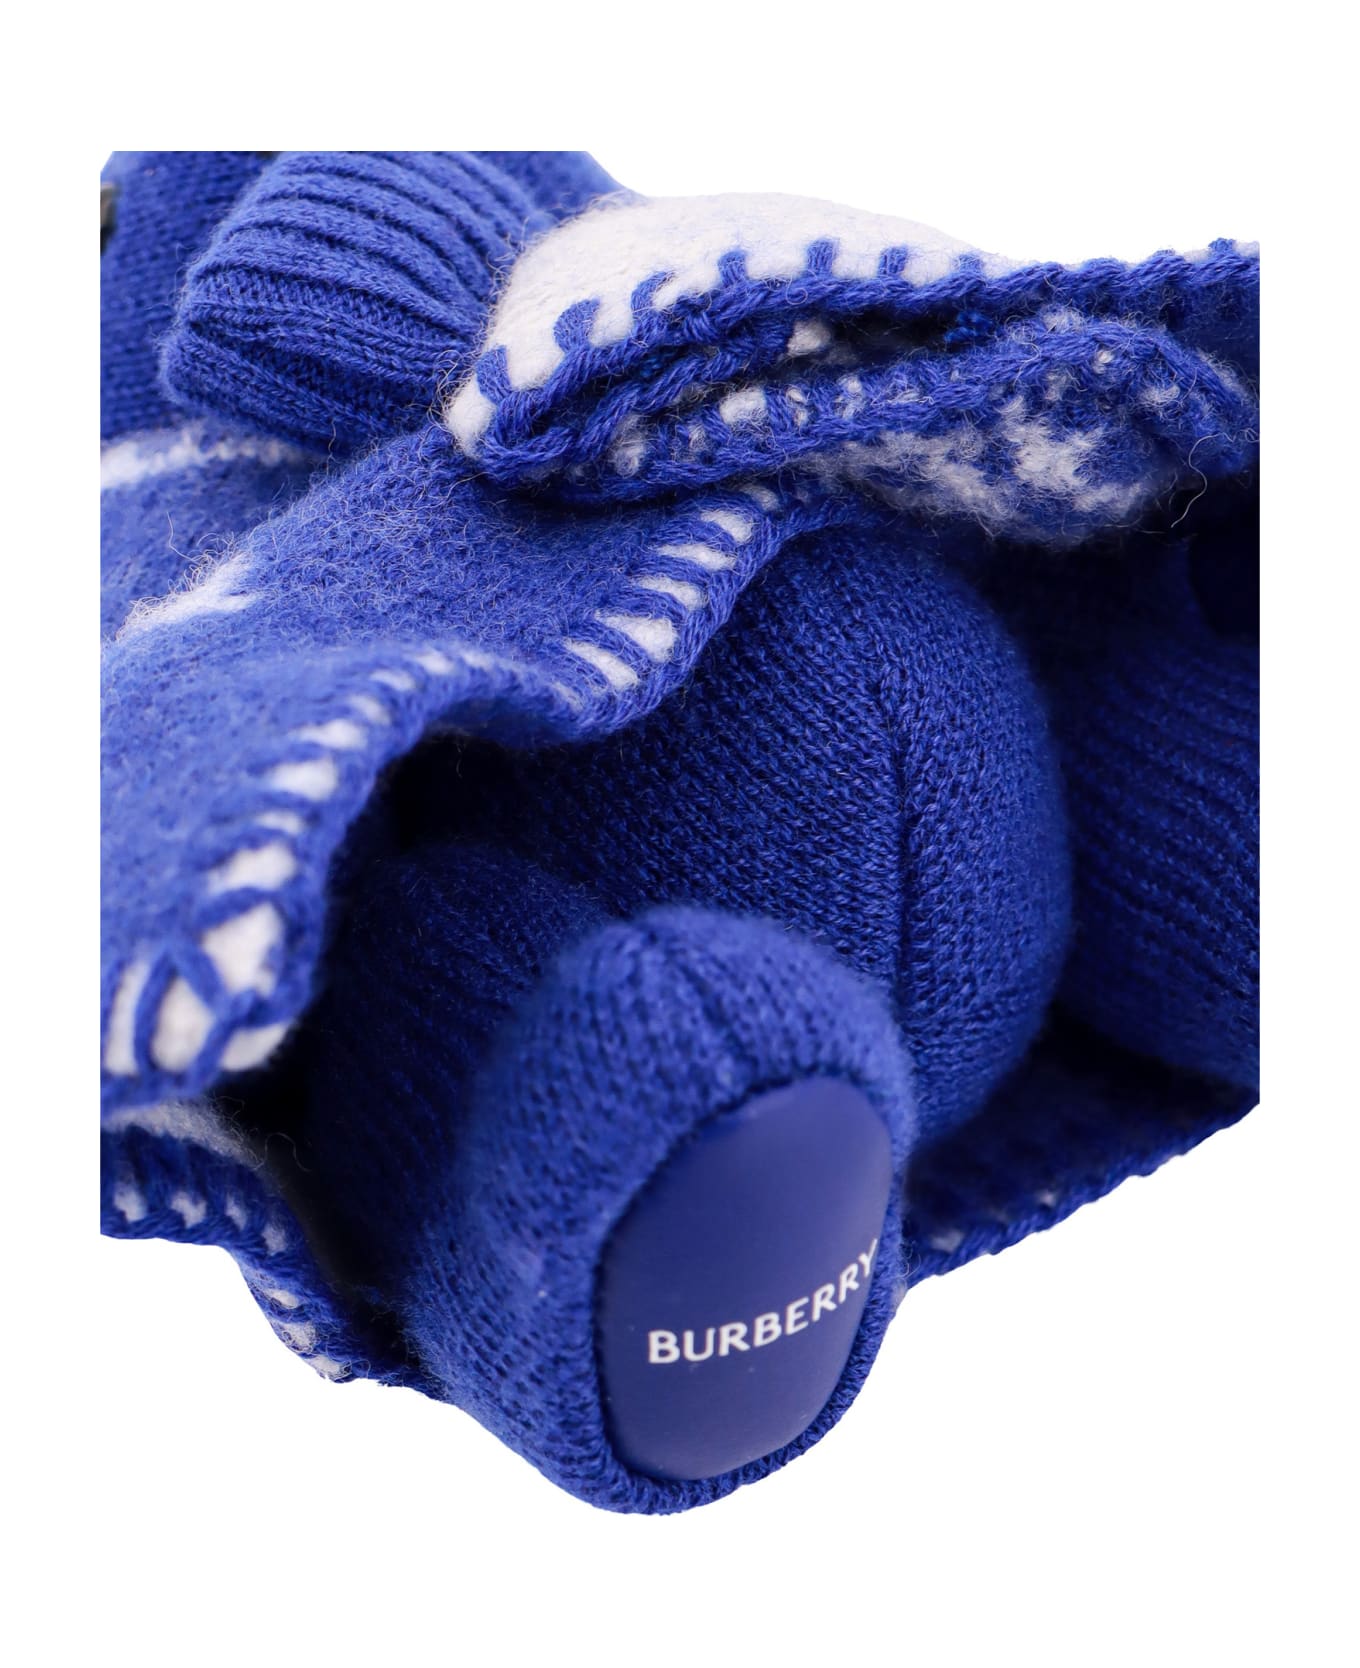 Burberry Key Ring - Blue